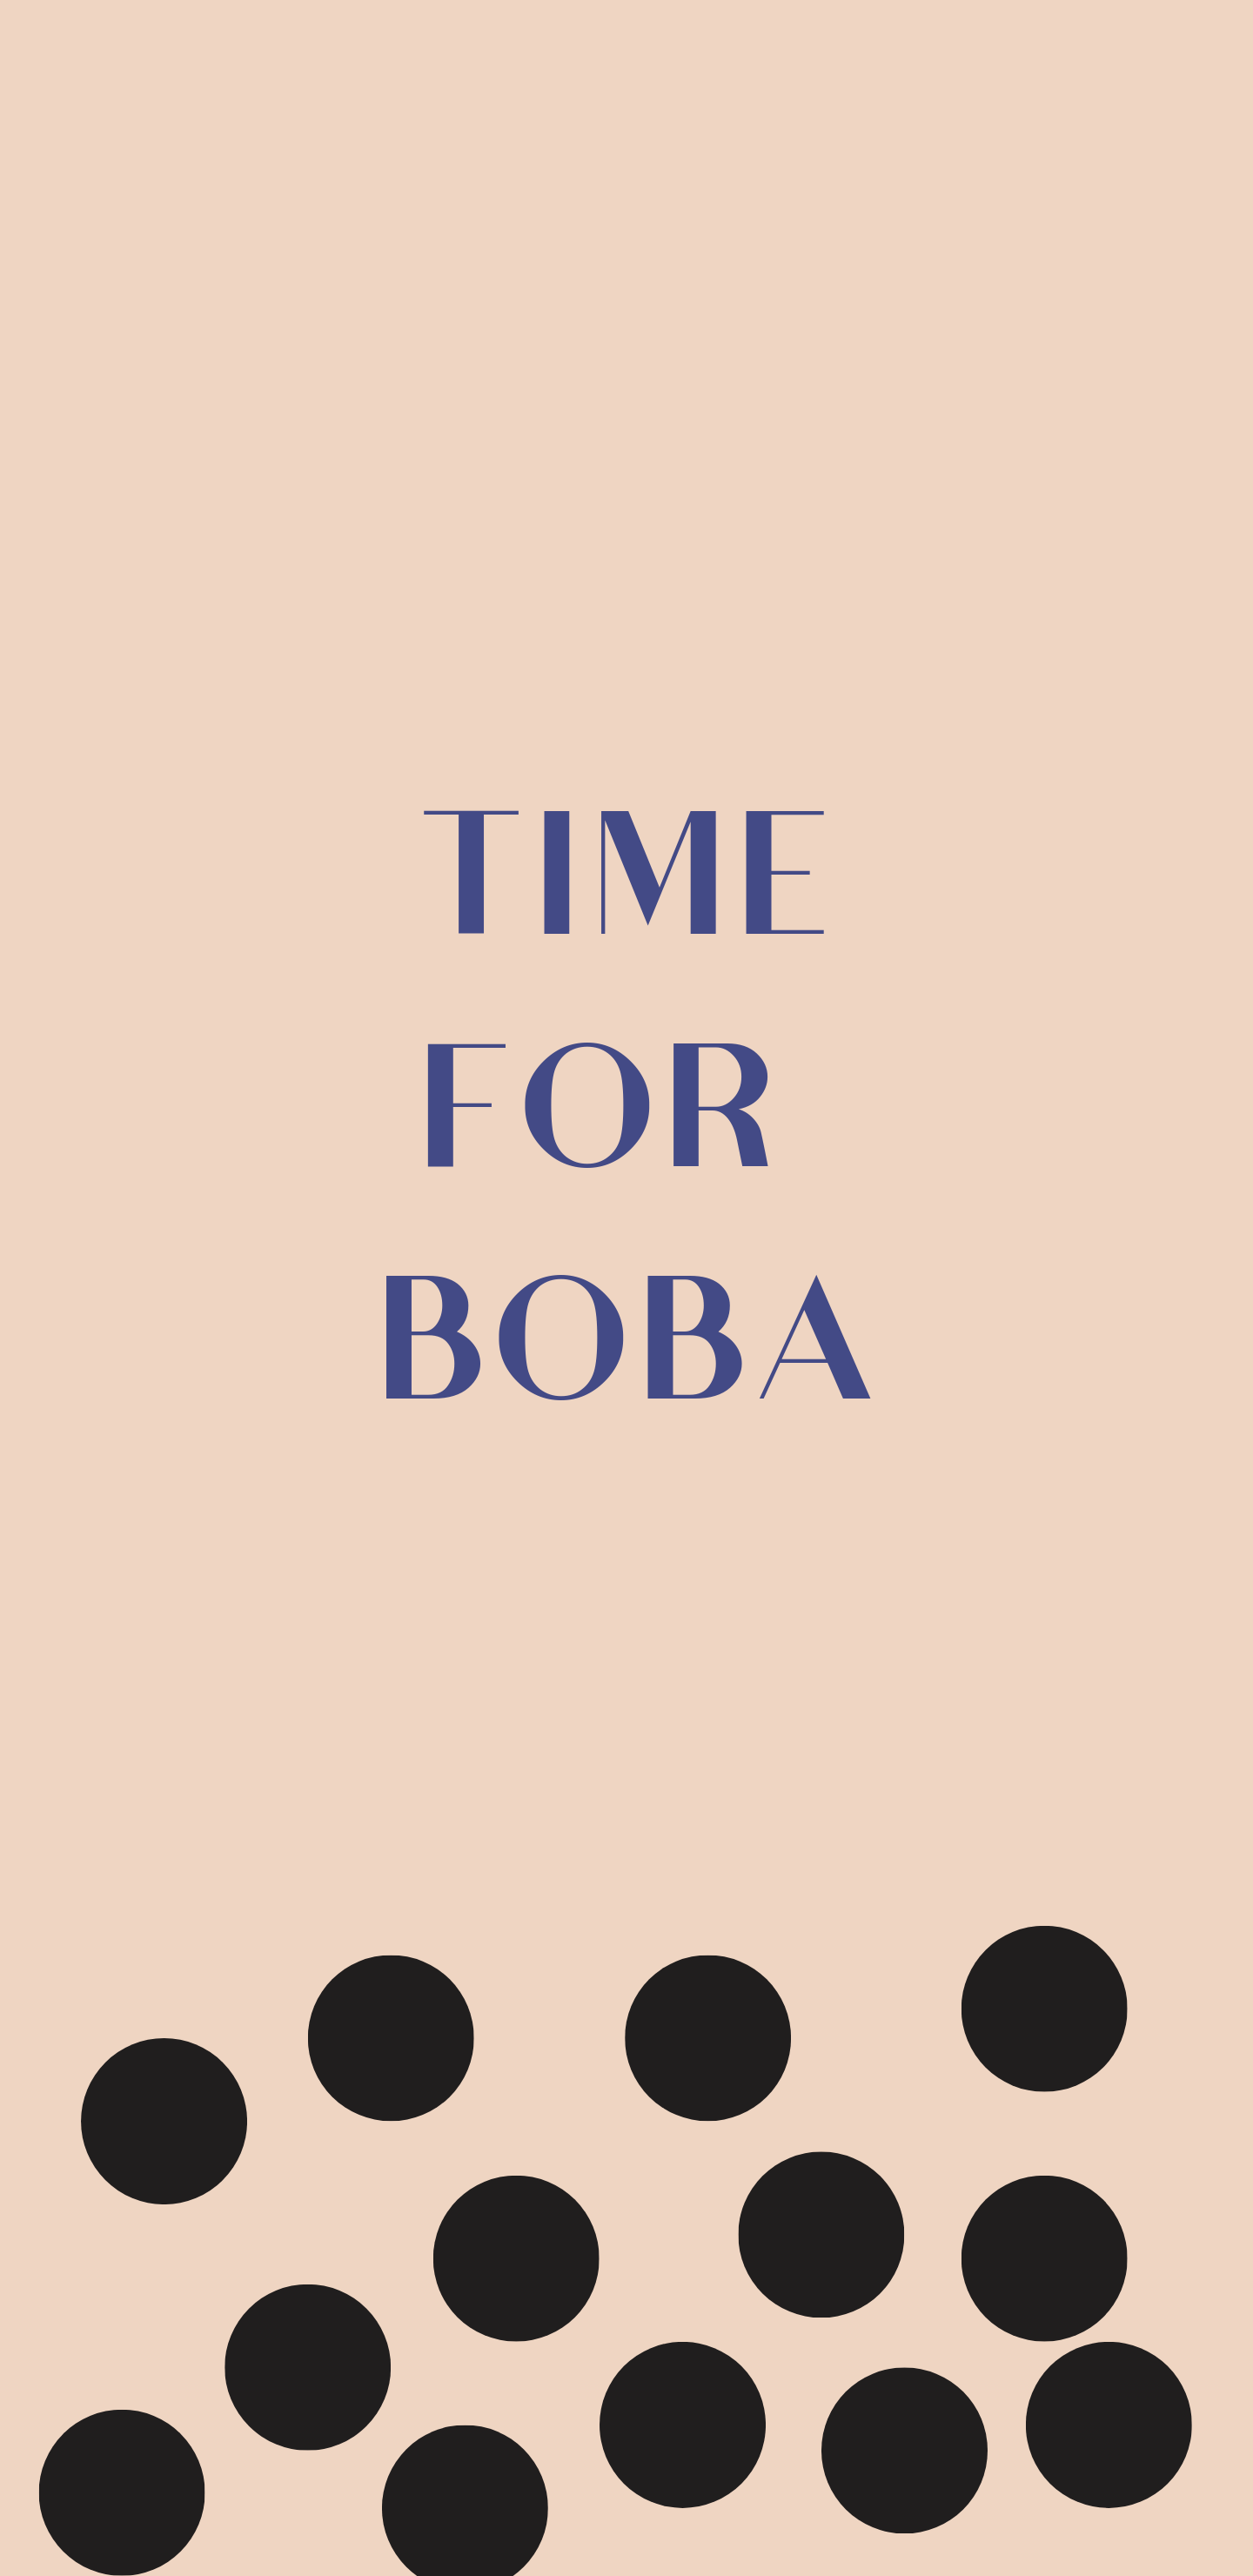 Time for Boba Phone Wallpaper  Koi Tea  Bubble Tea and Ice Cream